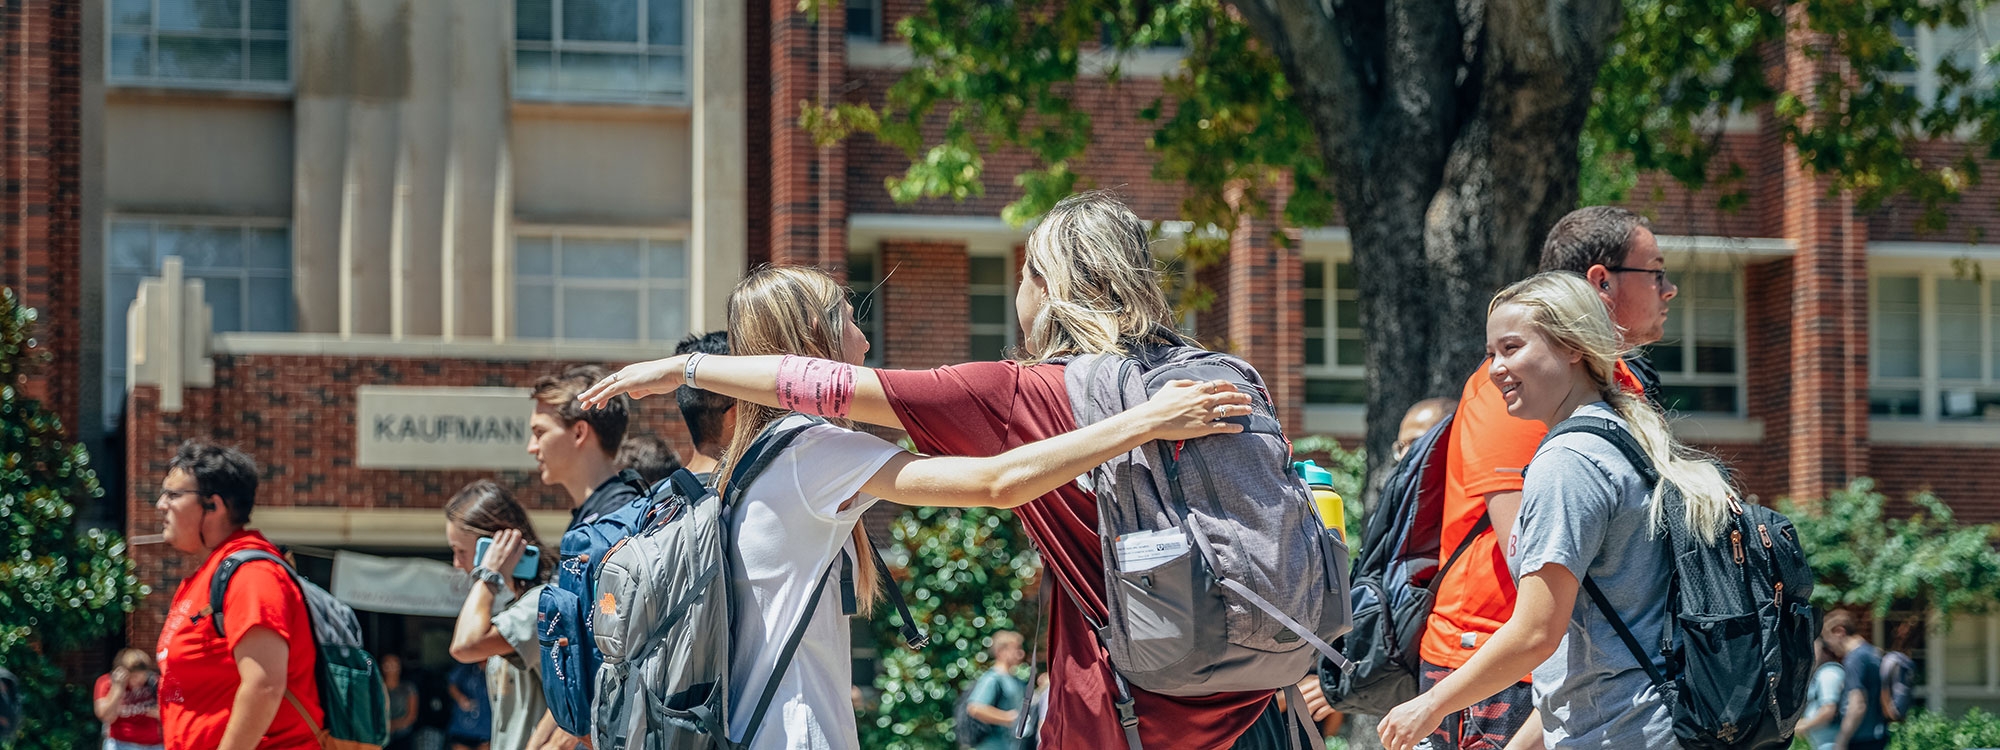 Students embracing outside of Kaufman Hall.